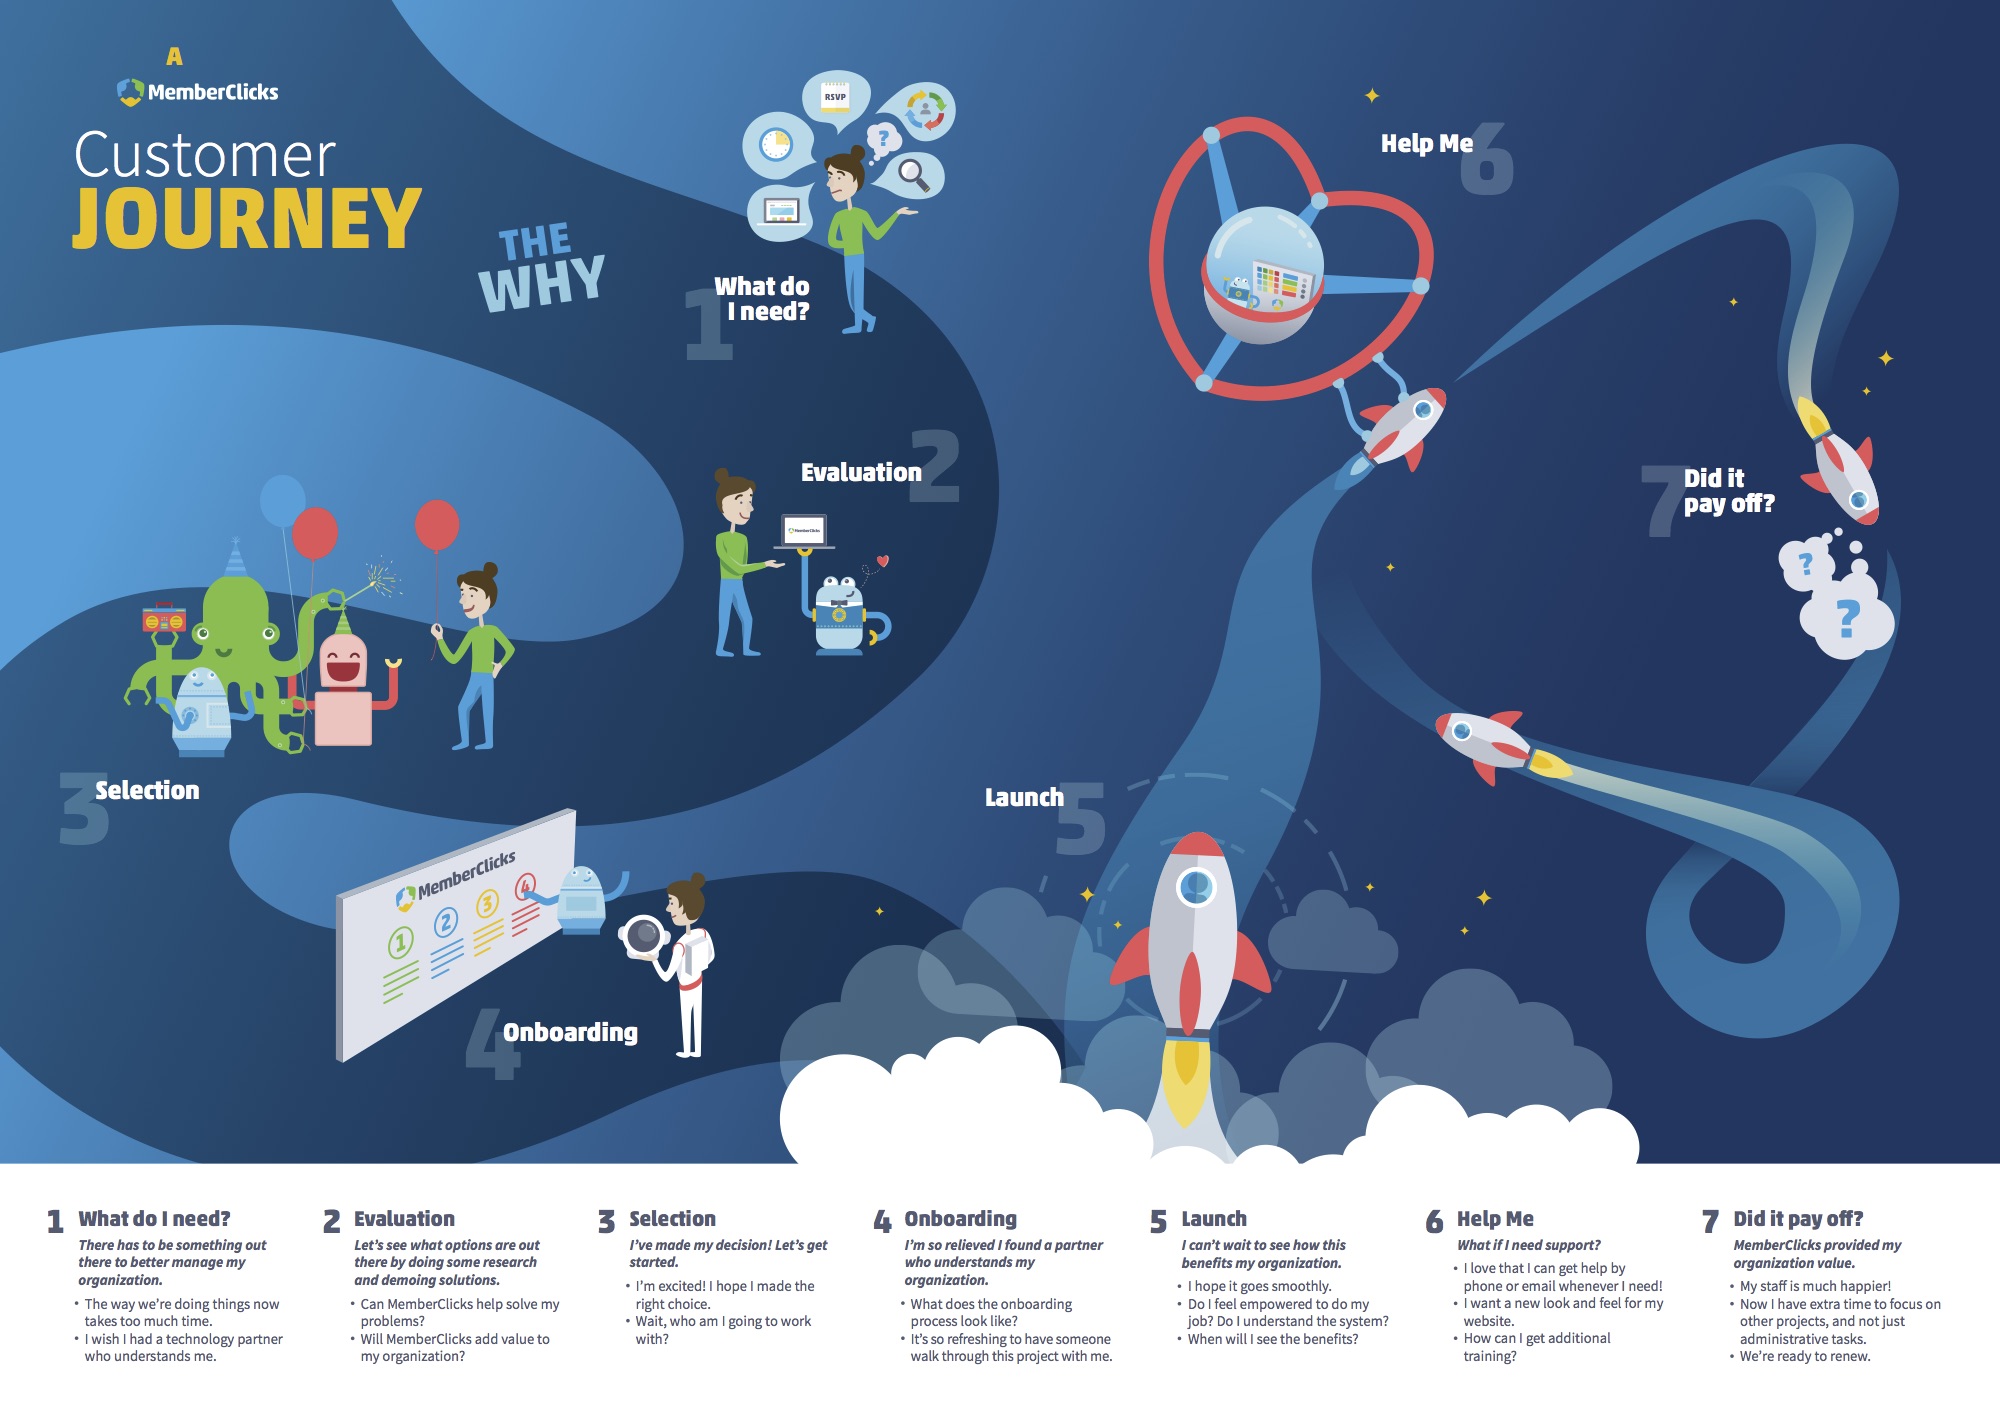 Customer Journey Infographic-11.2.17 (2).jpg